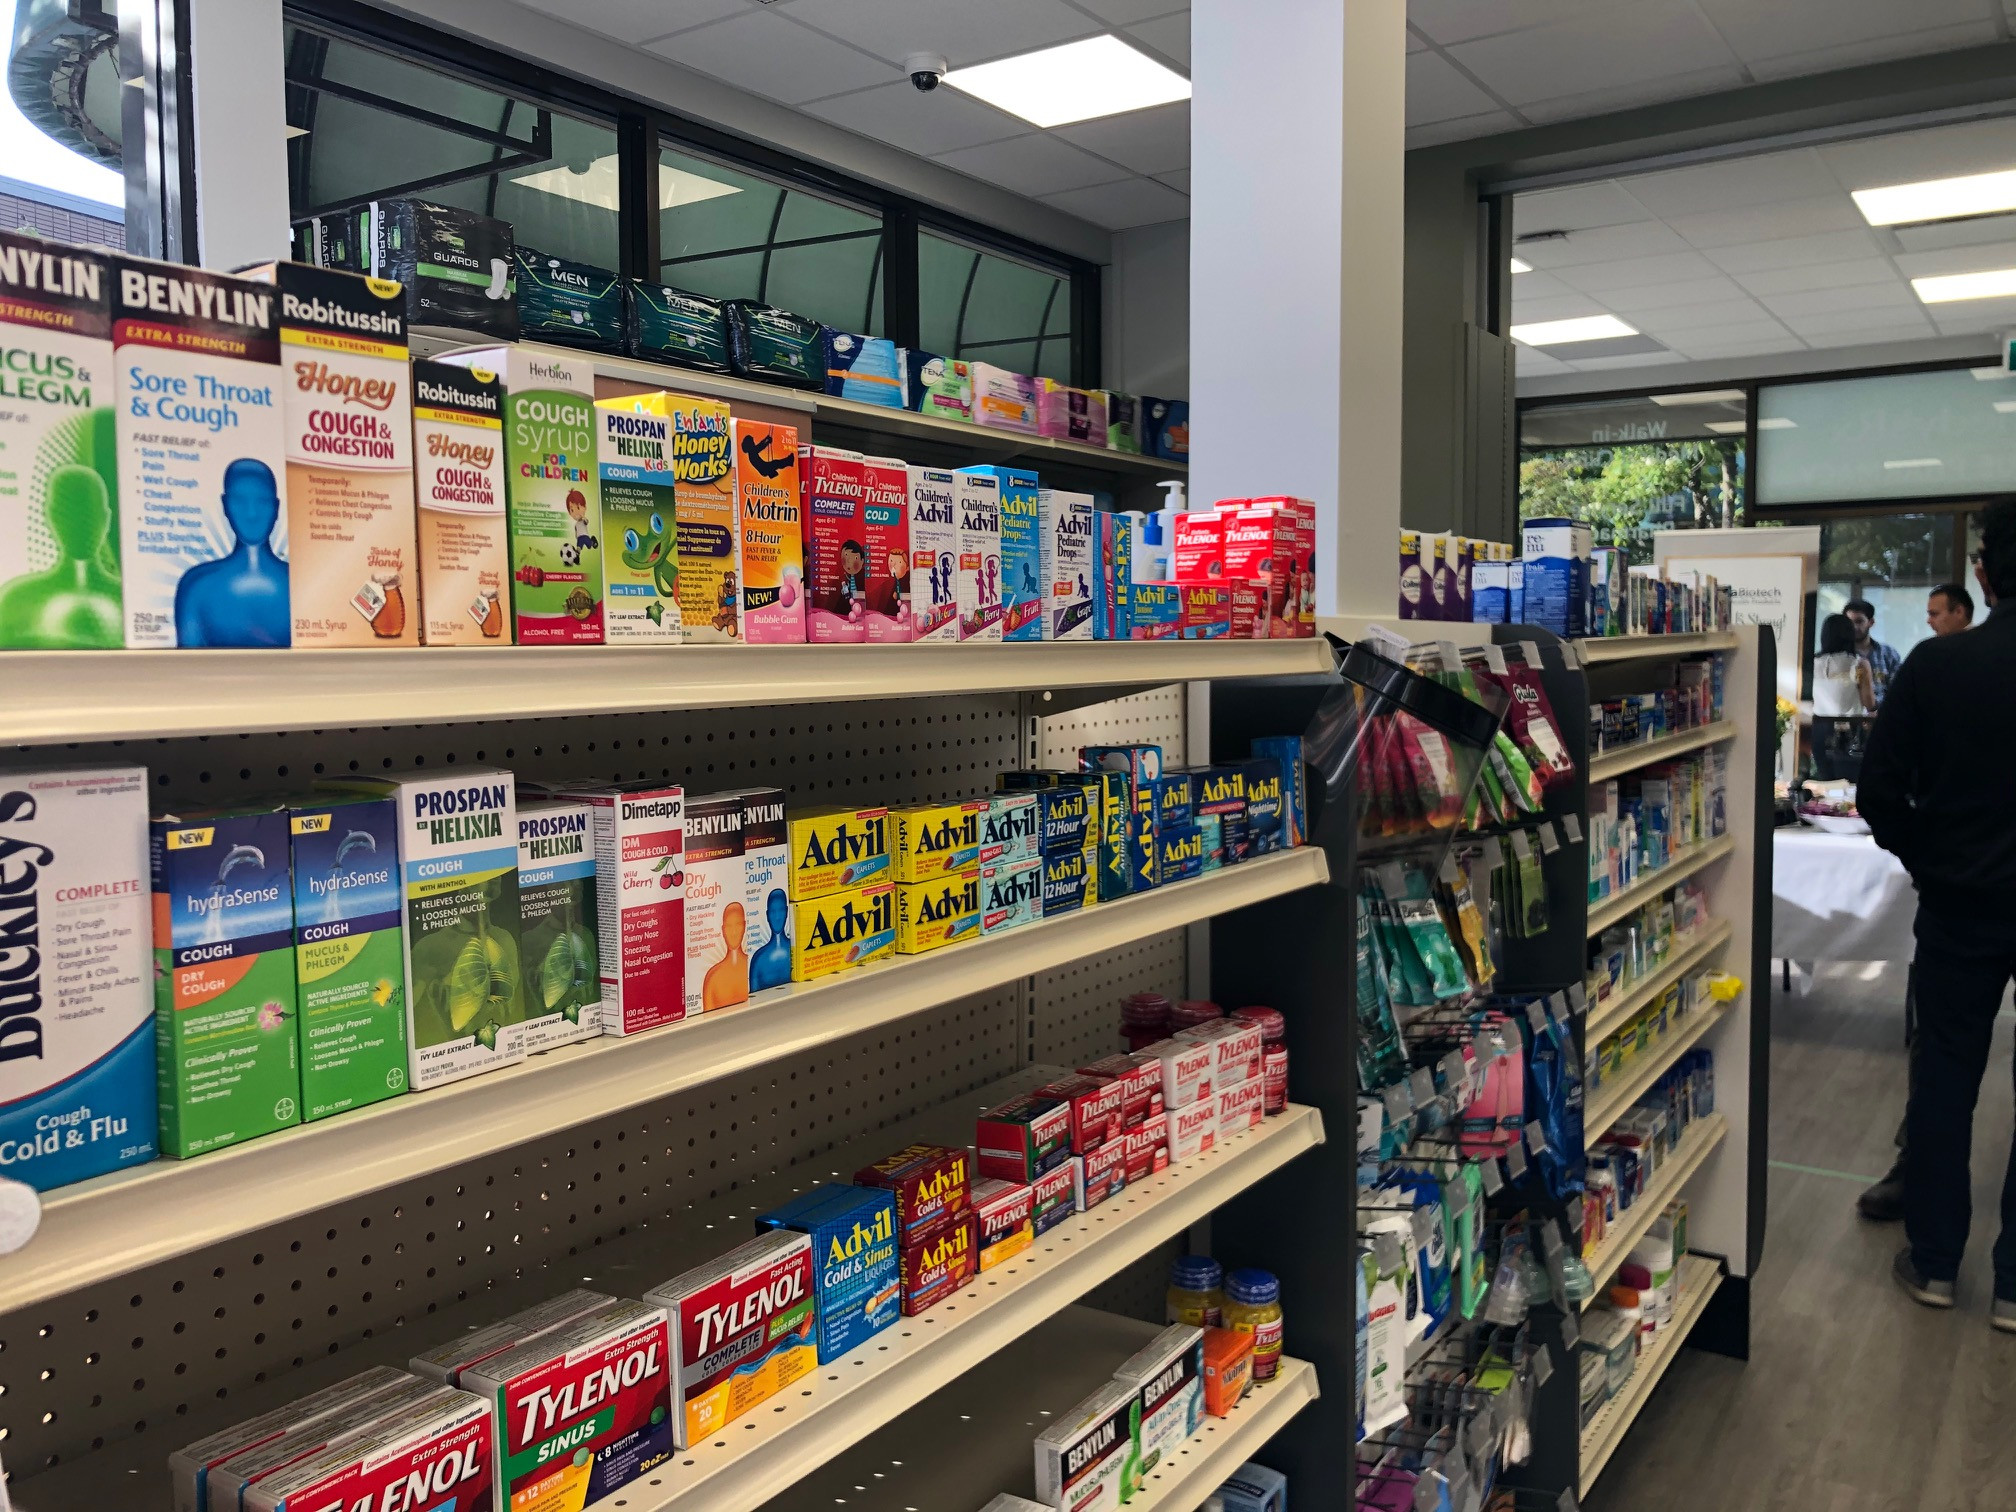 Pharmacy Improvement - West Vancouver 2020